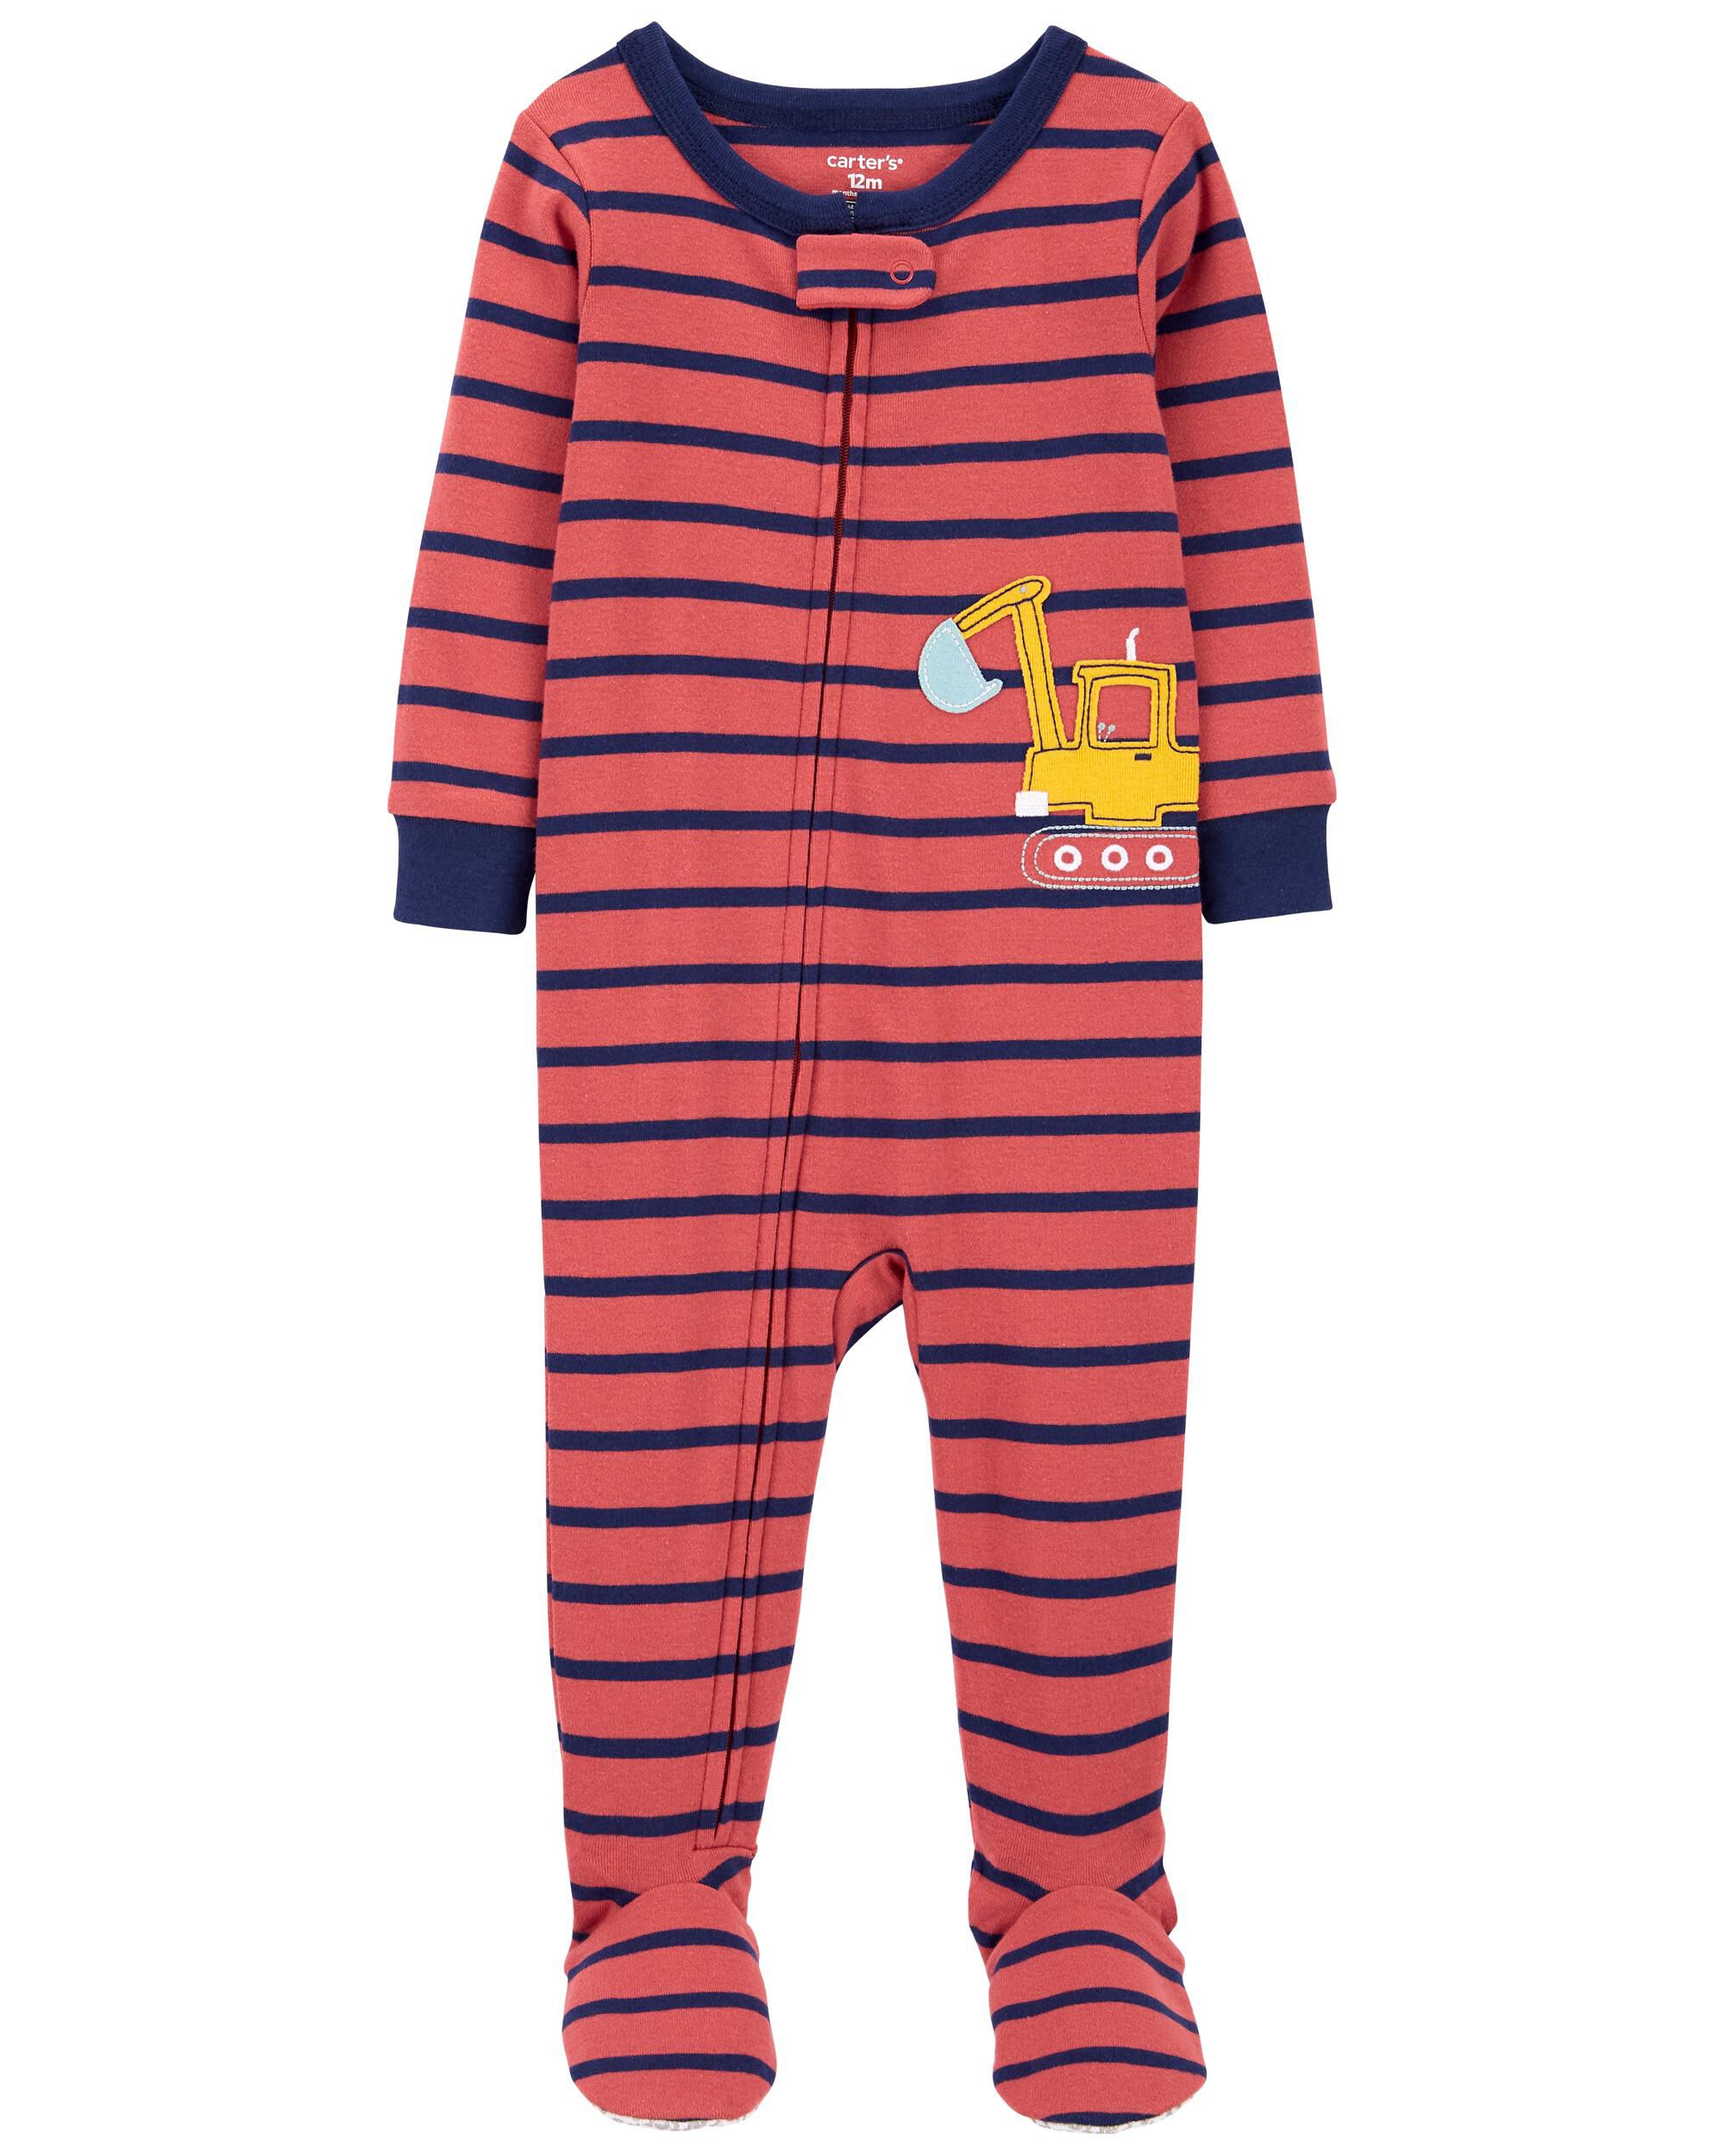 New Carter's 1-Piece Tiger Snug Fit Cotton Footless Pajama PJs Boy Sleeper 